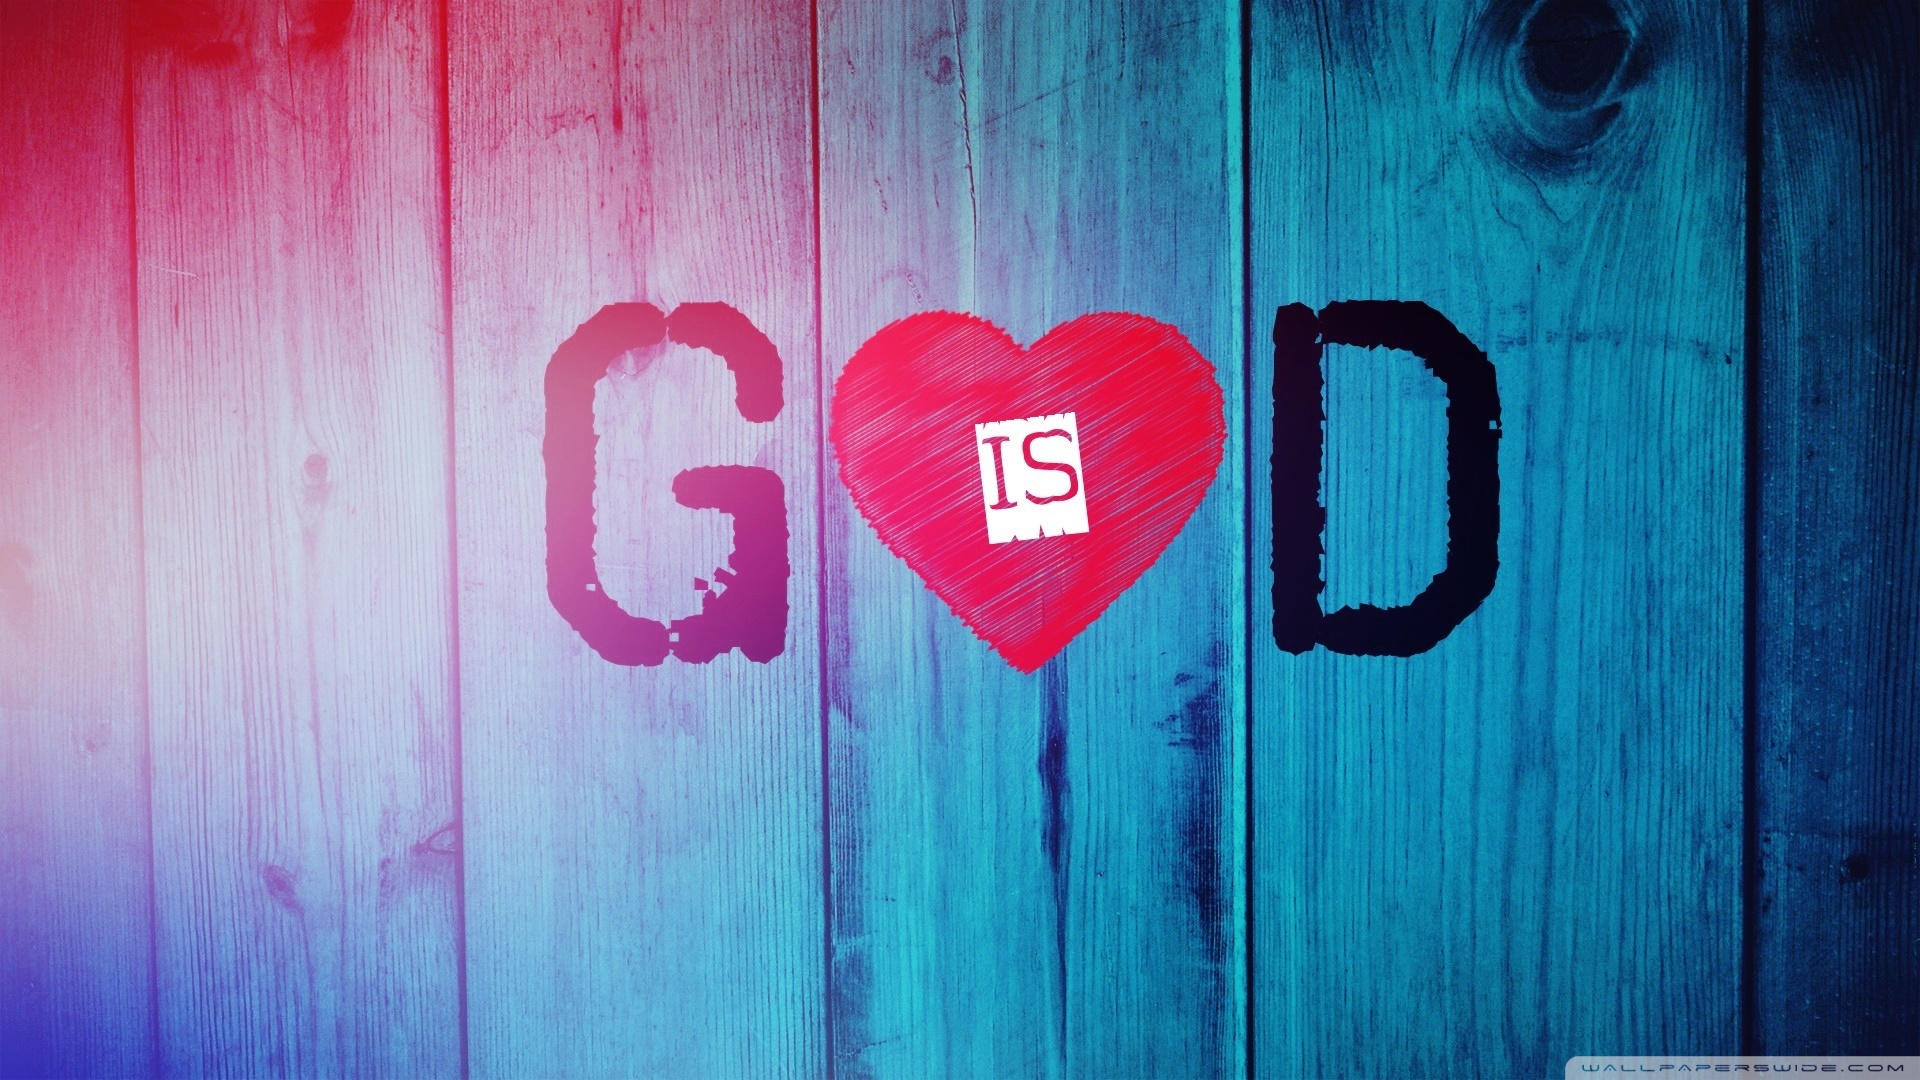 god hd wallpaper 1920x1080,heart,red,love,text,pink